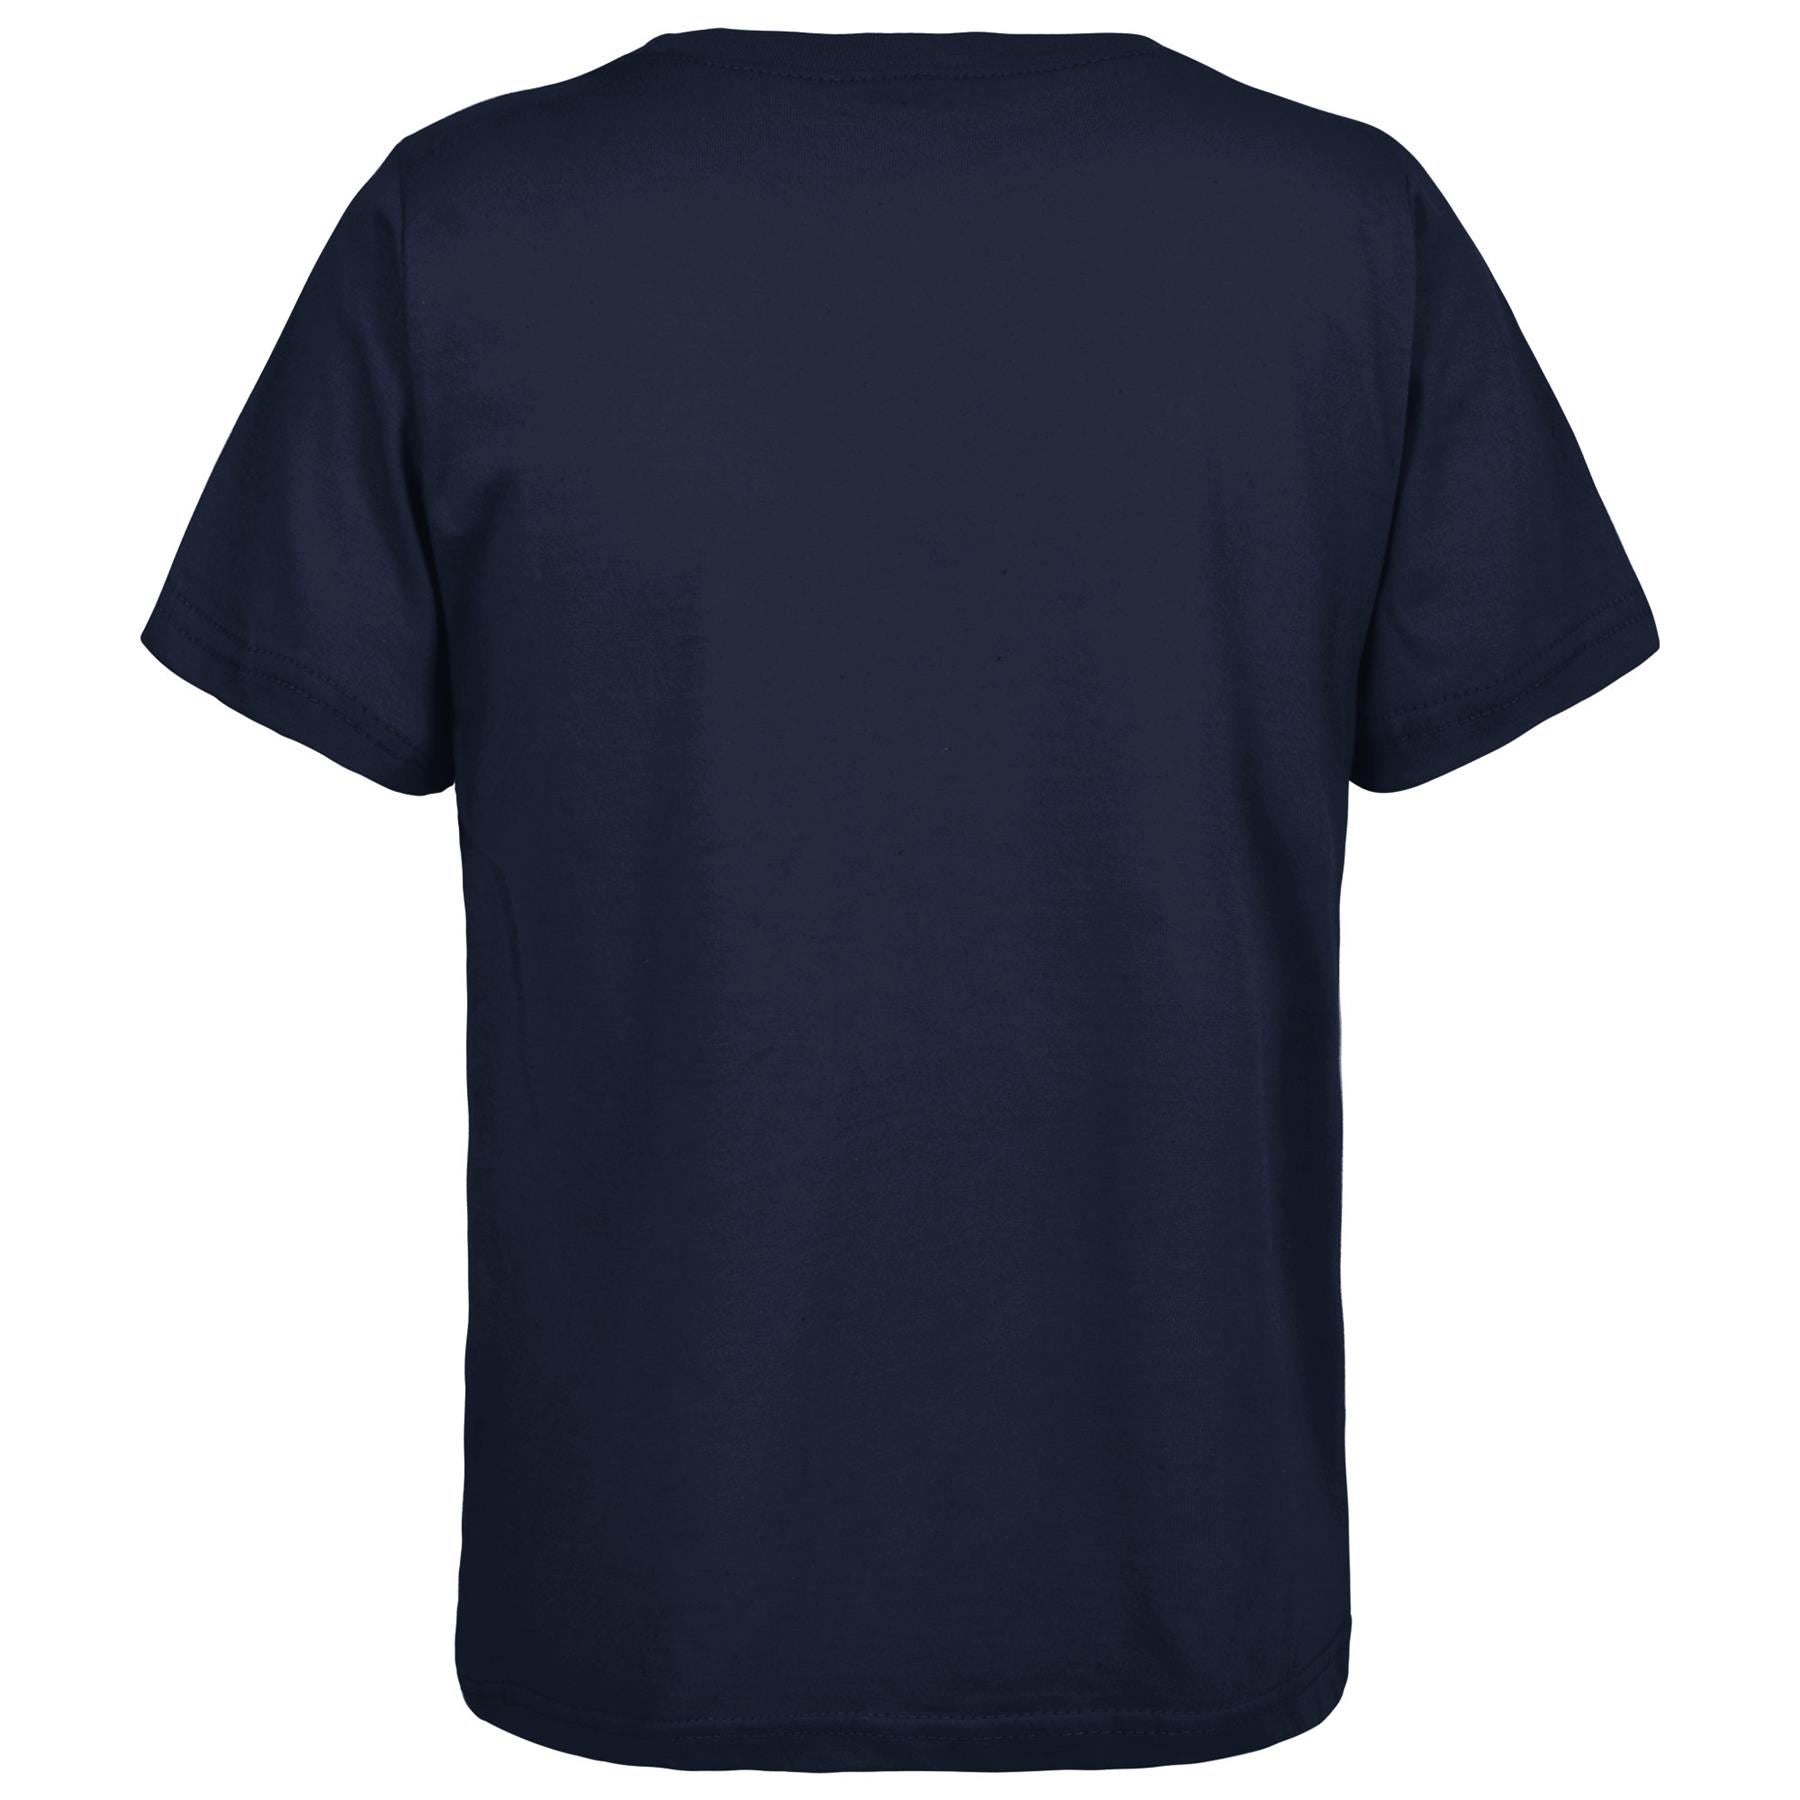 Boys Plain Soft Feel Summer Navy T Shirt Top